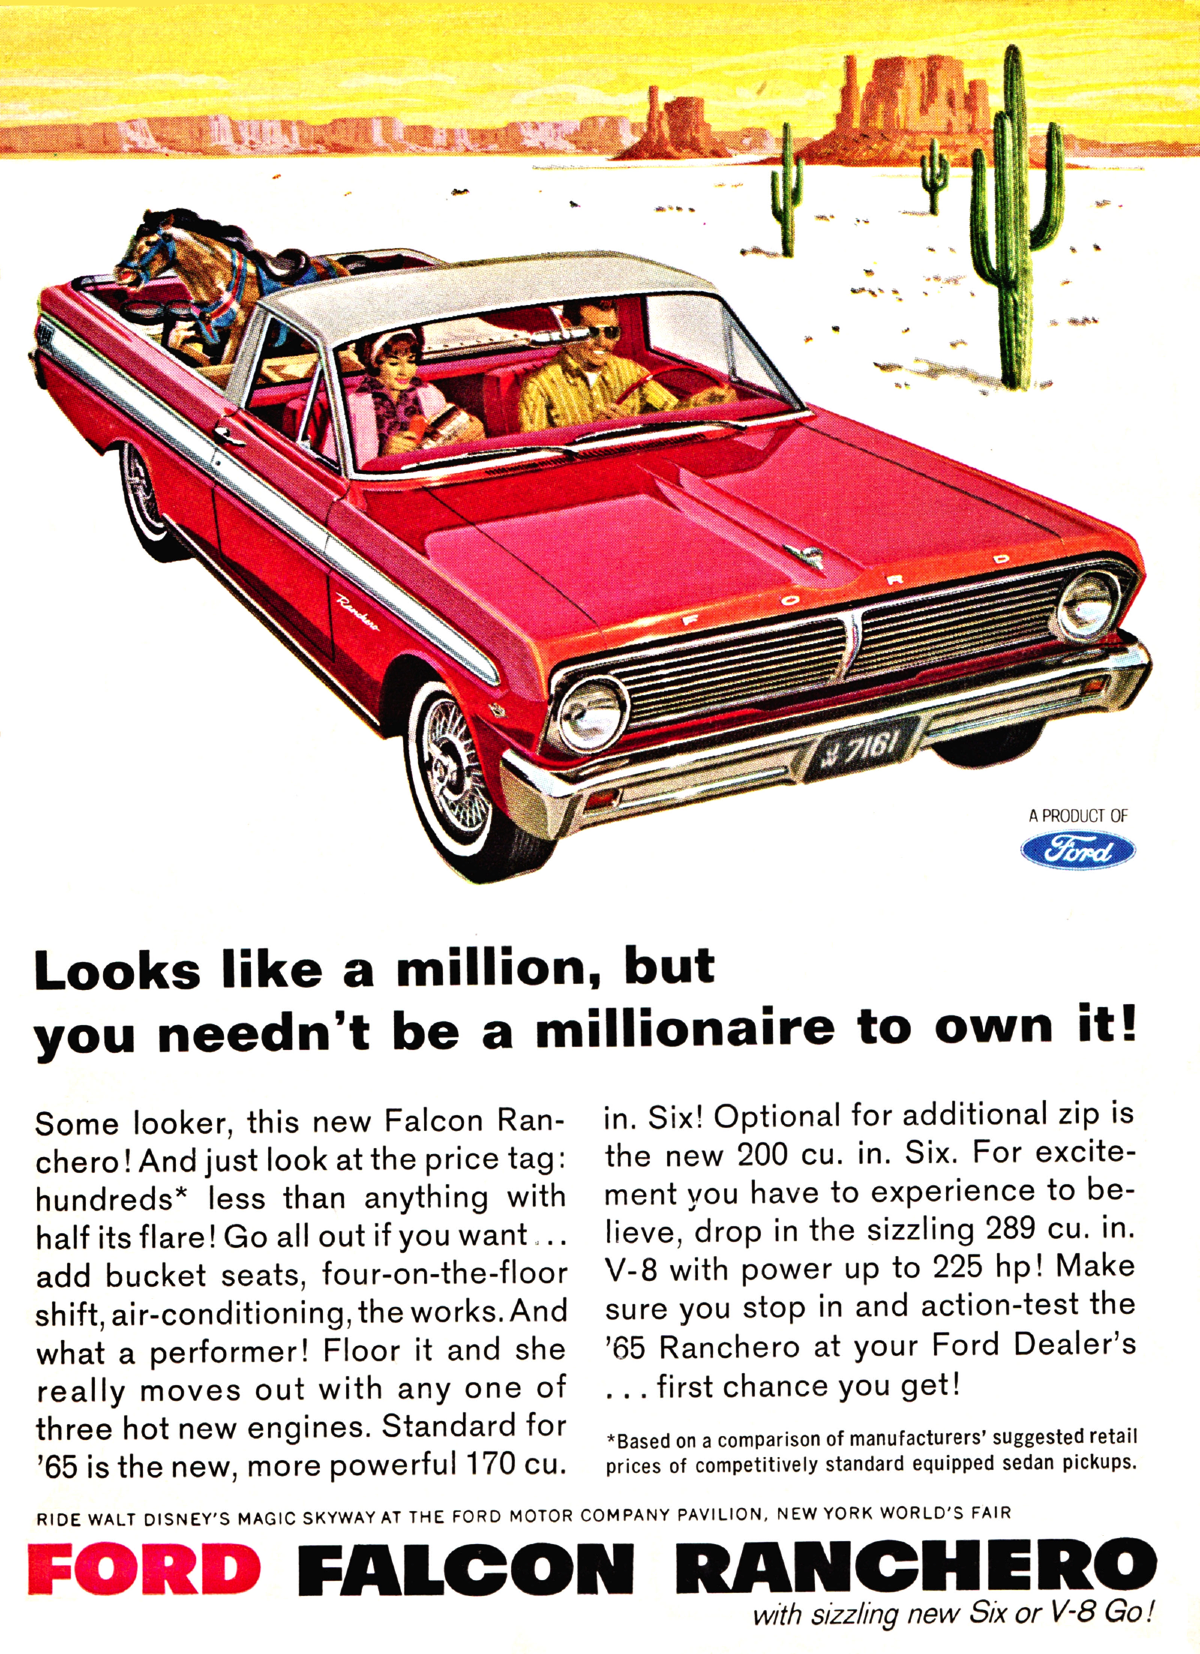 1965 Ford Ad Falcon Ranchero "Looks like a million, but..."